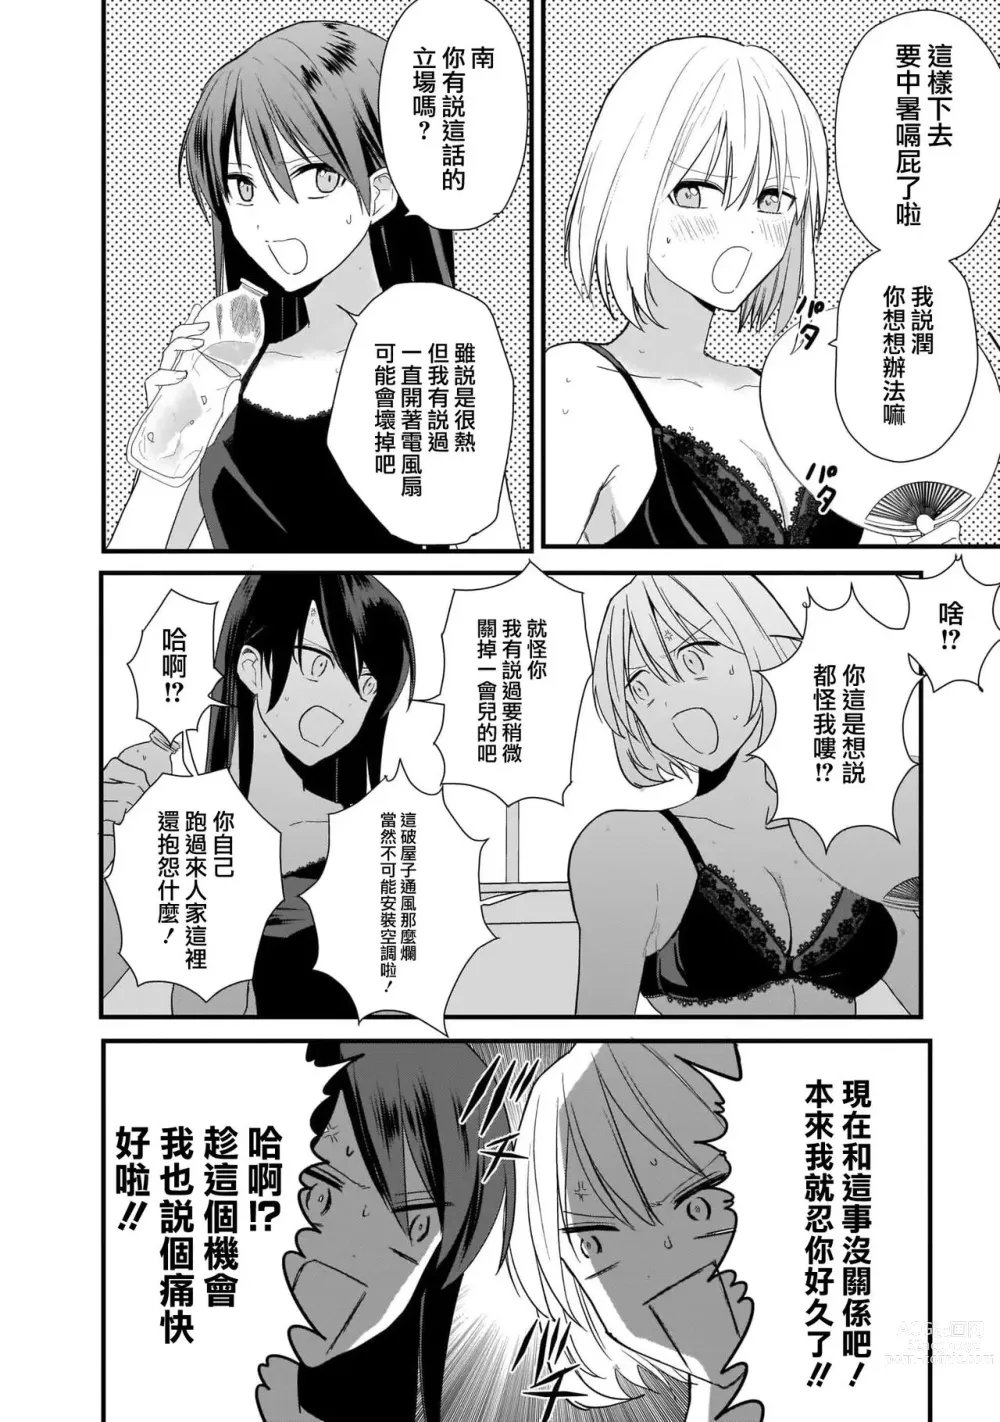 Page 3 of manga 冷却运动